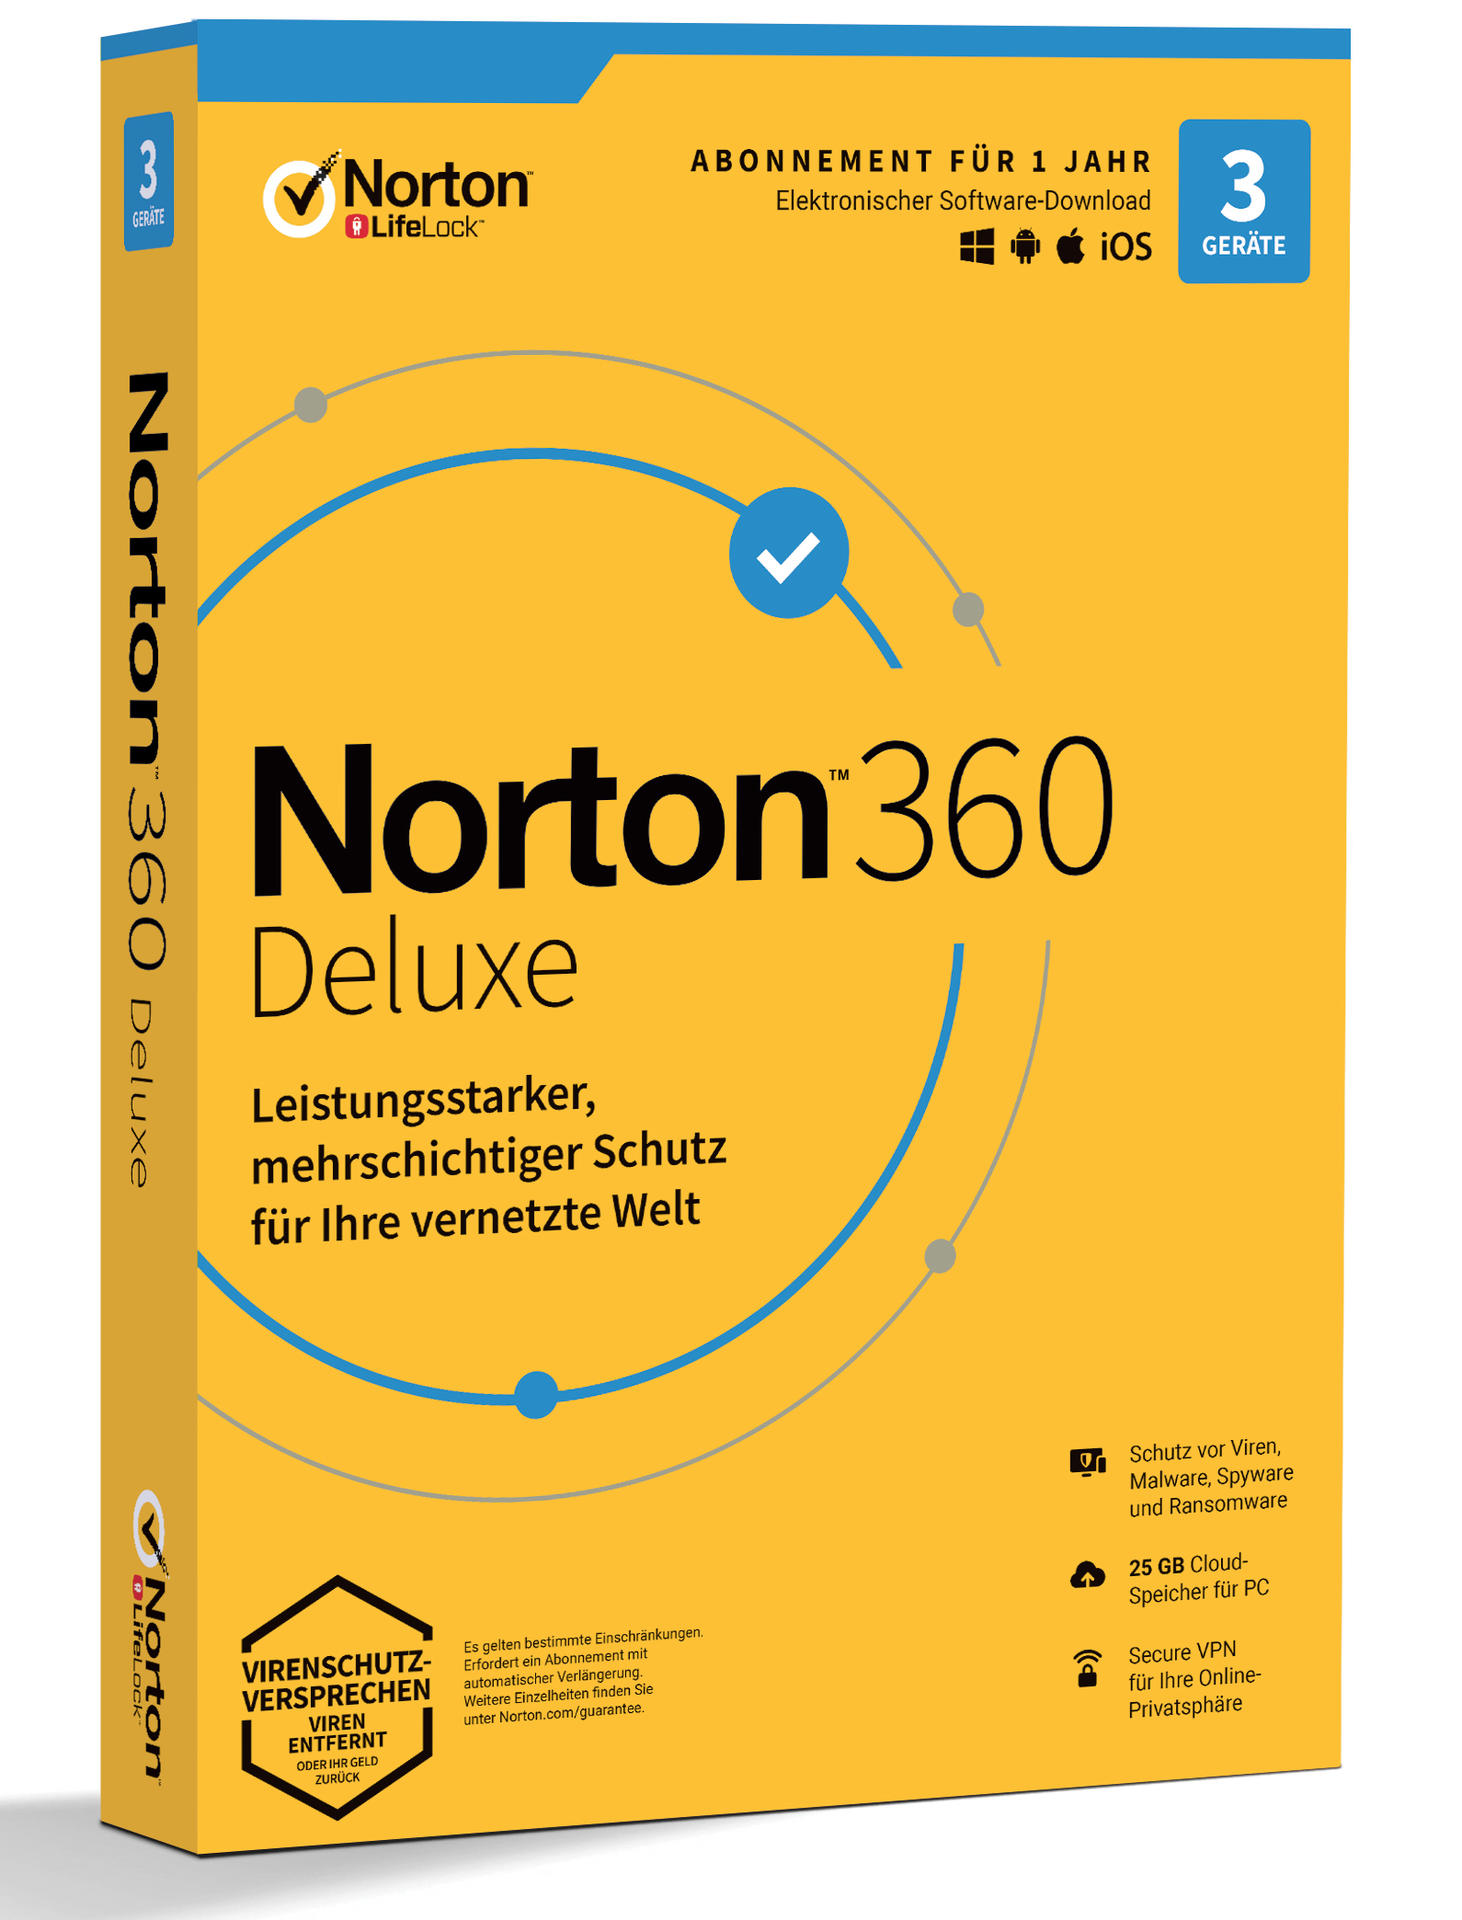 Norton 360 Deluxe Jahr MAC, iOS, Geräte - Android) - - 1 1 3 Benutzer (PC, 25GB - Cloud-Speicher